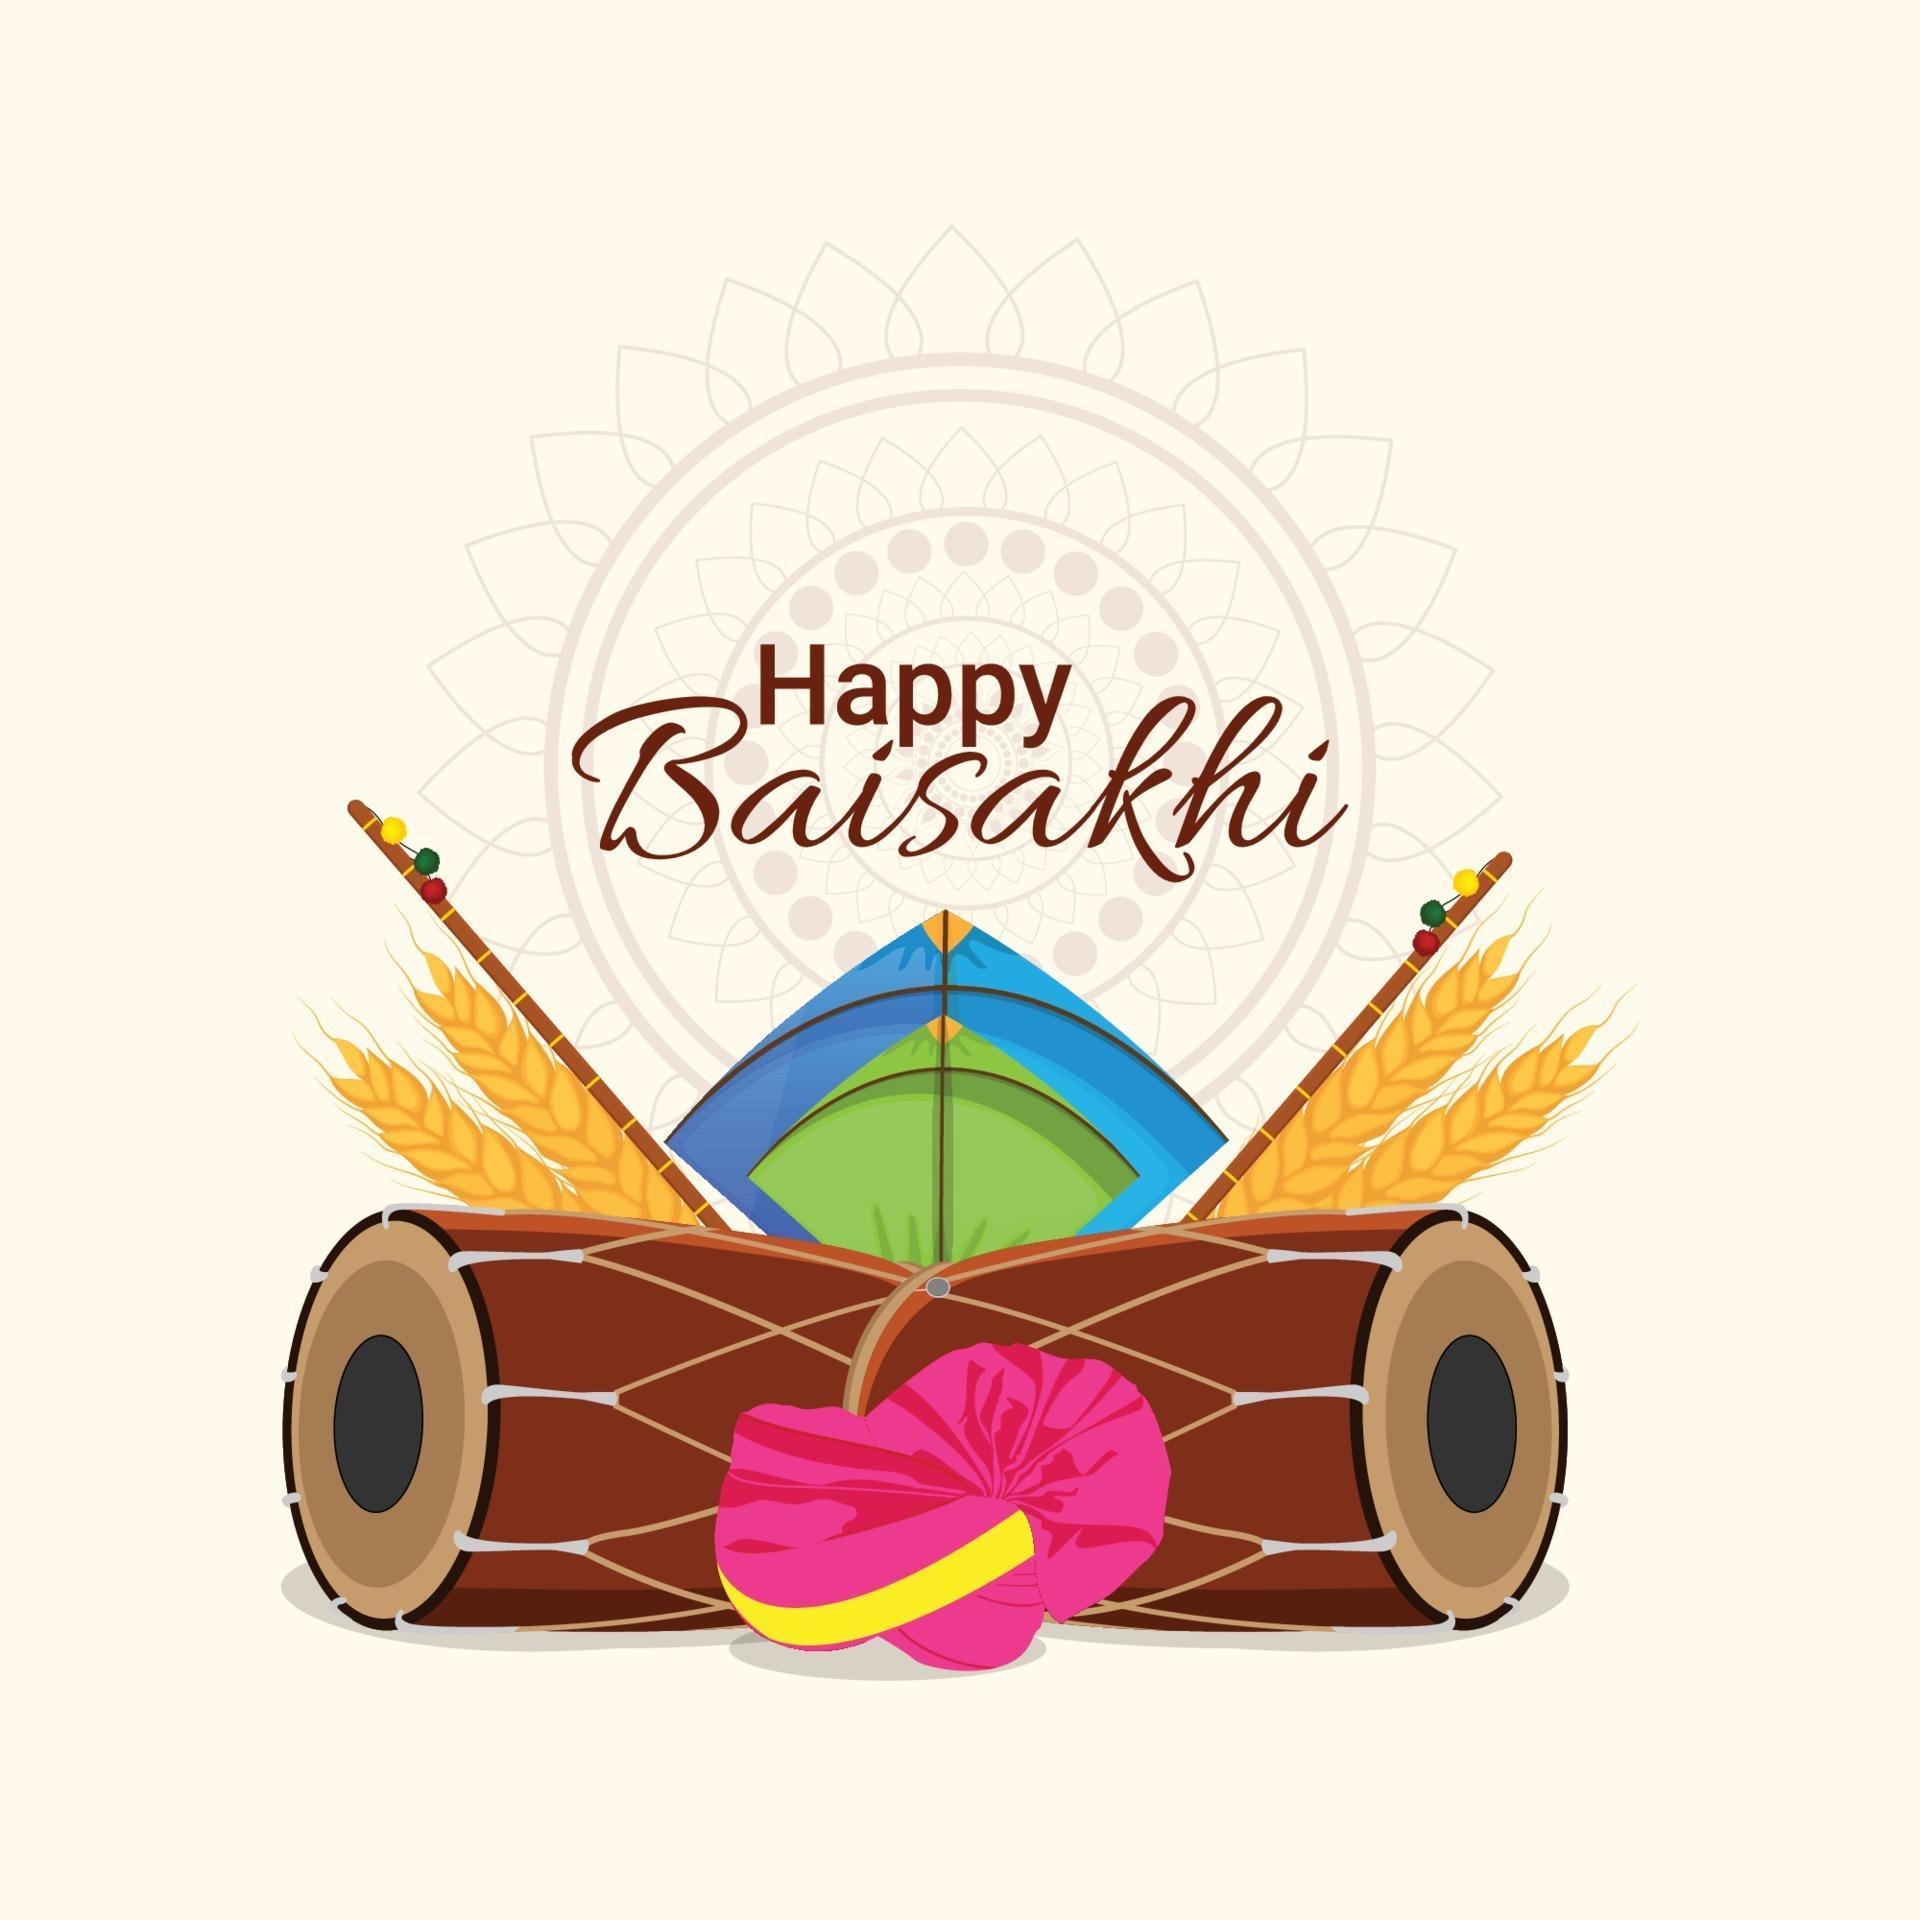 Happy vaisakhi celebration greeting card with vector illustration